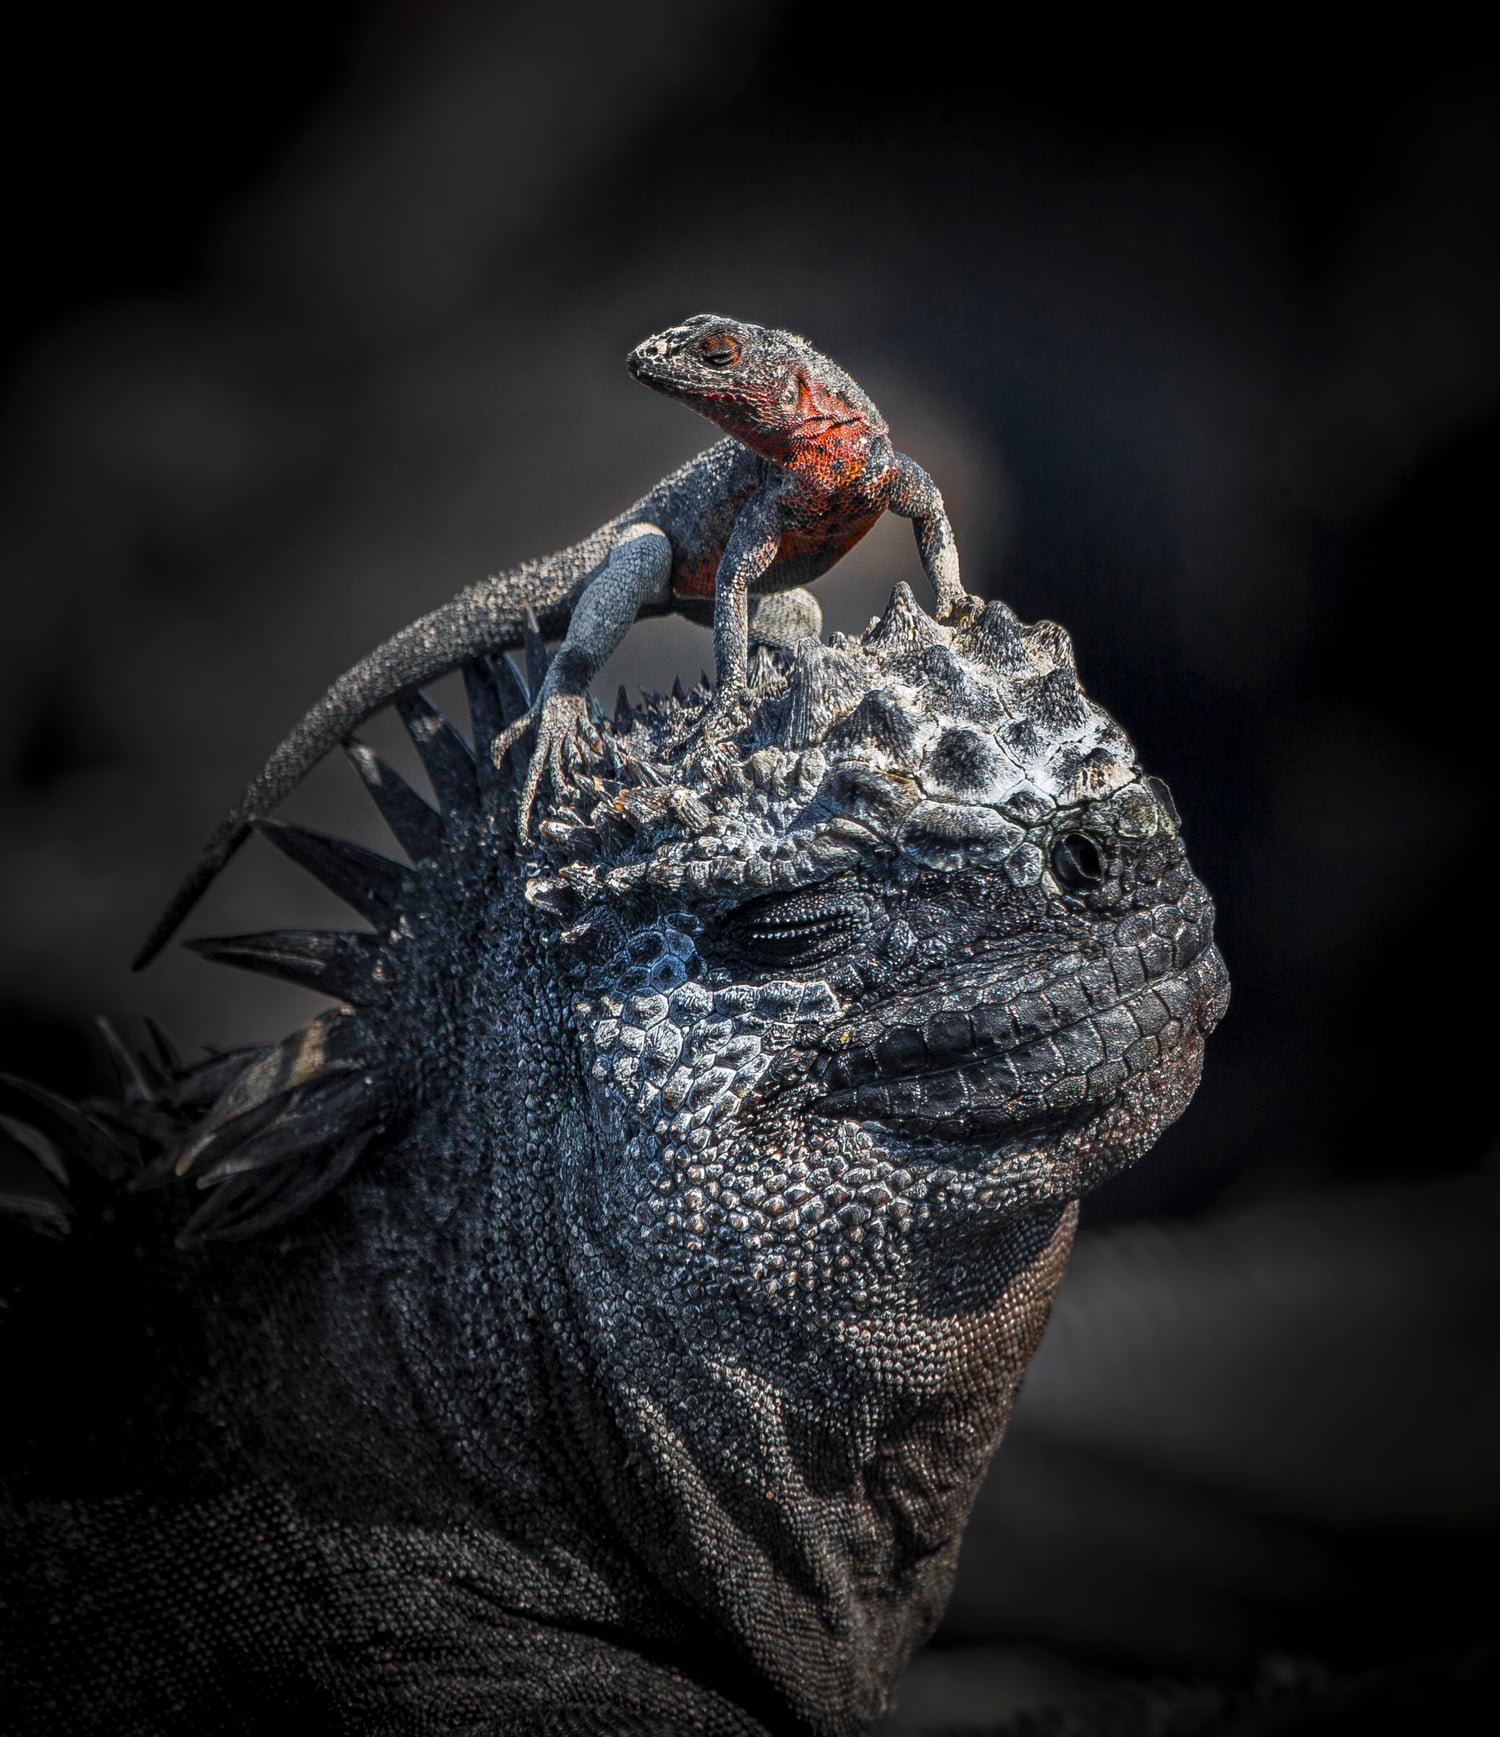 A lava lizard giving a head massage to a marine iguana on the Galapagos Islands. World Nature Photography Awards